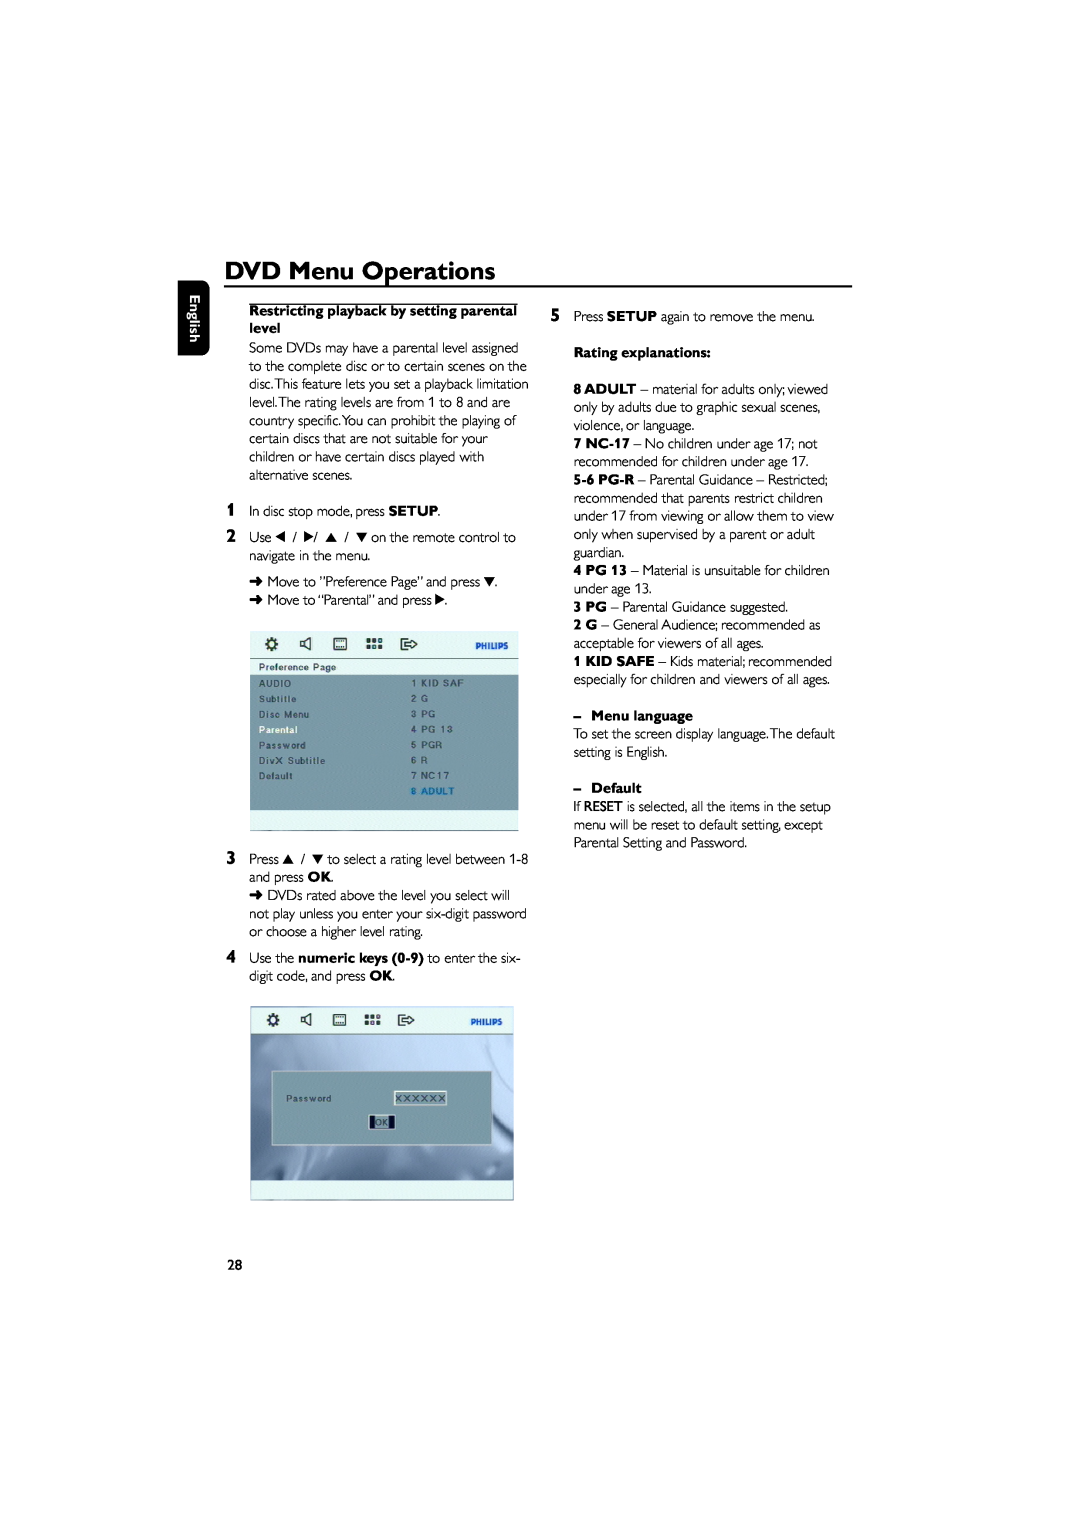 Philips FWD185 user manual Rating explanations, Menu language, Default, DVD Menu Operations 